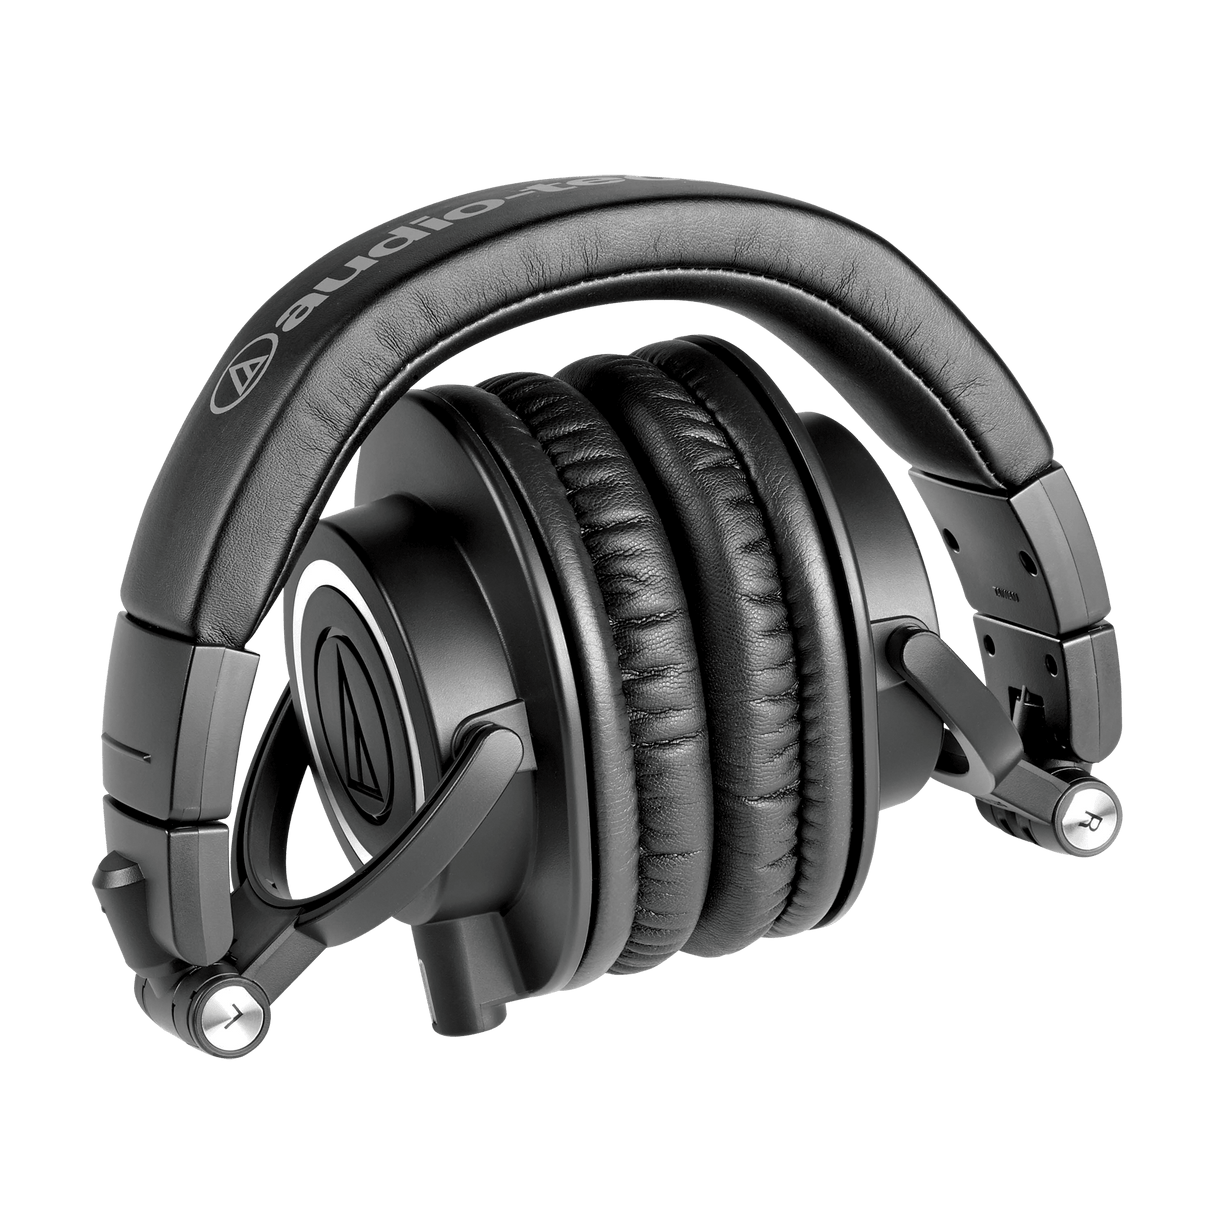 ATHM50X Professional Monitor Headphones Detachable Cables Foldable Black